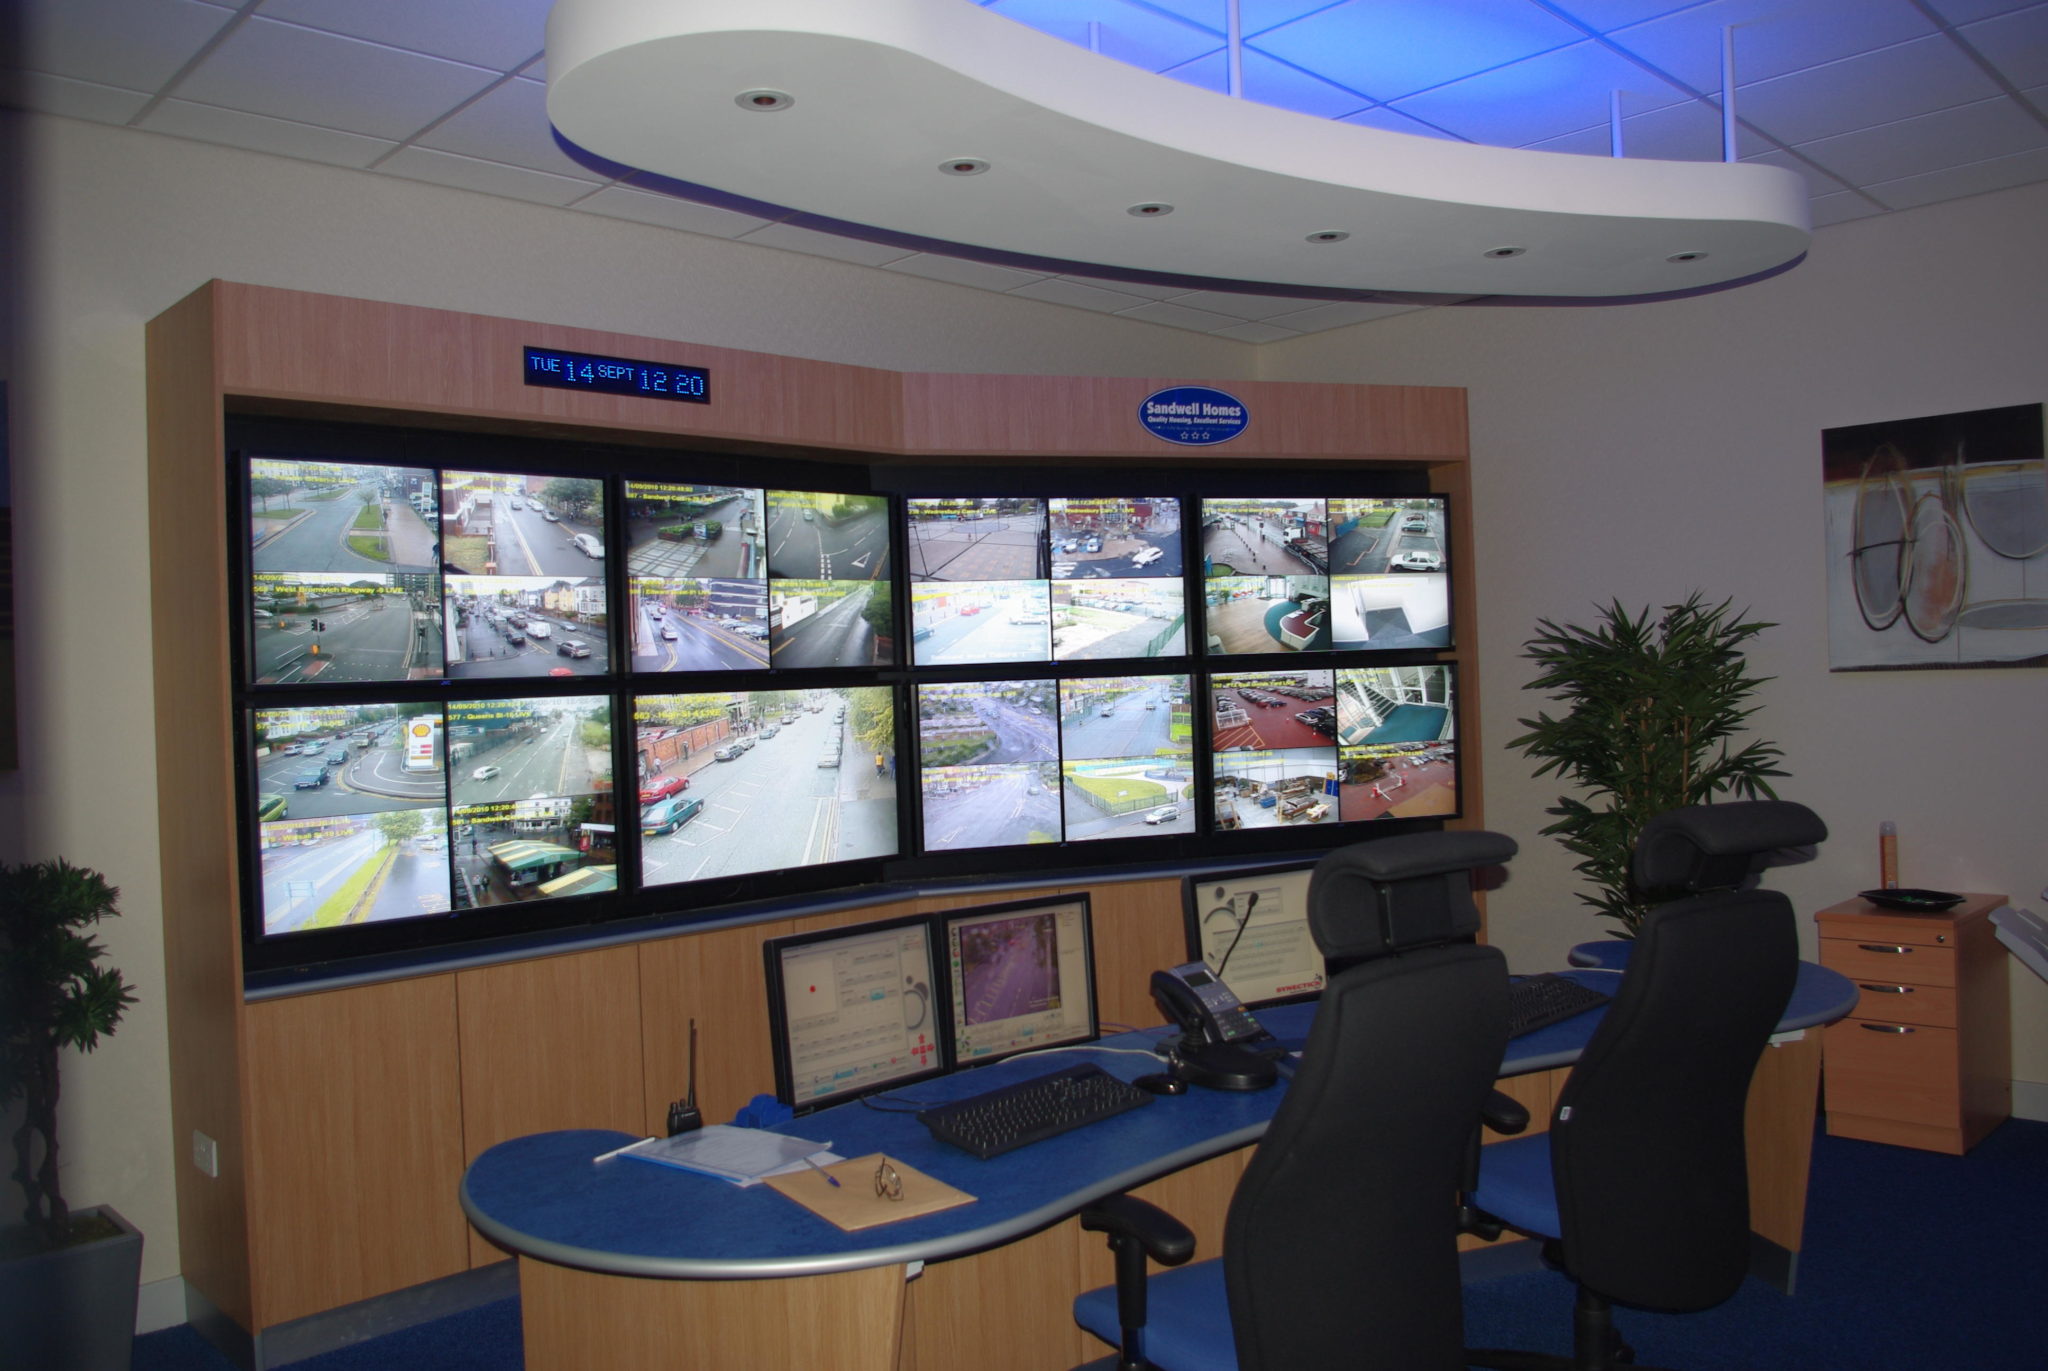 Sandwell CCTV case study